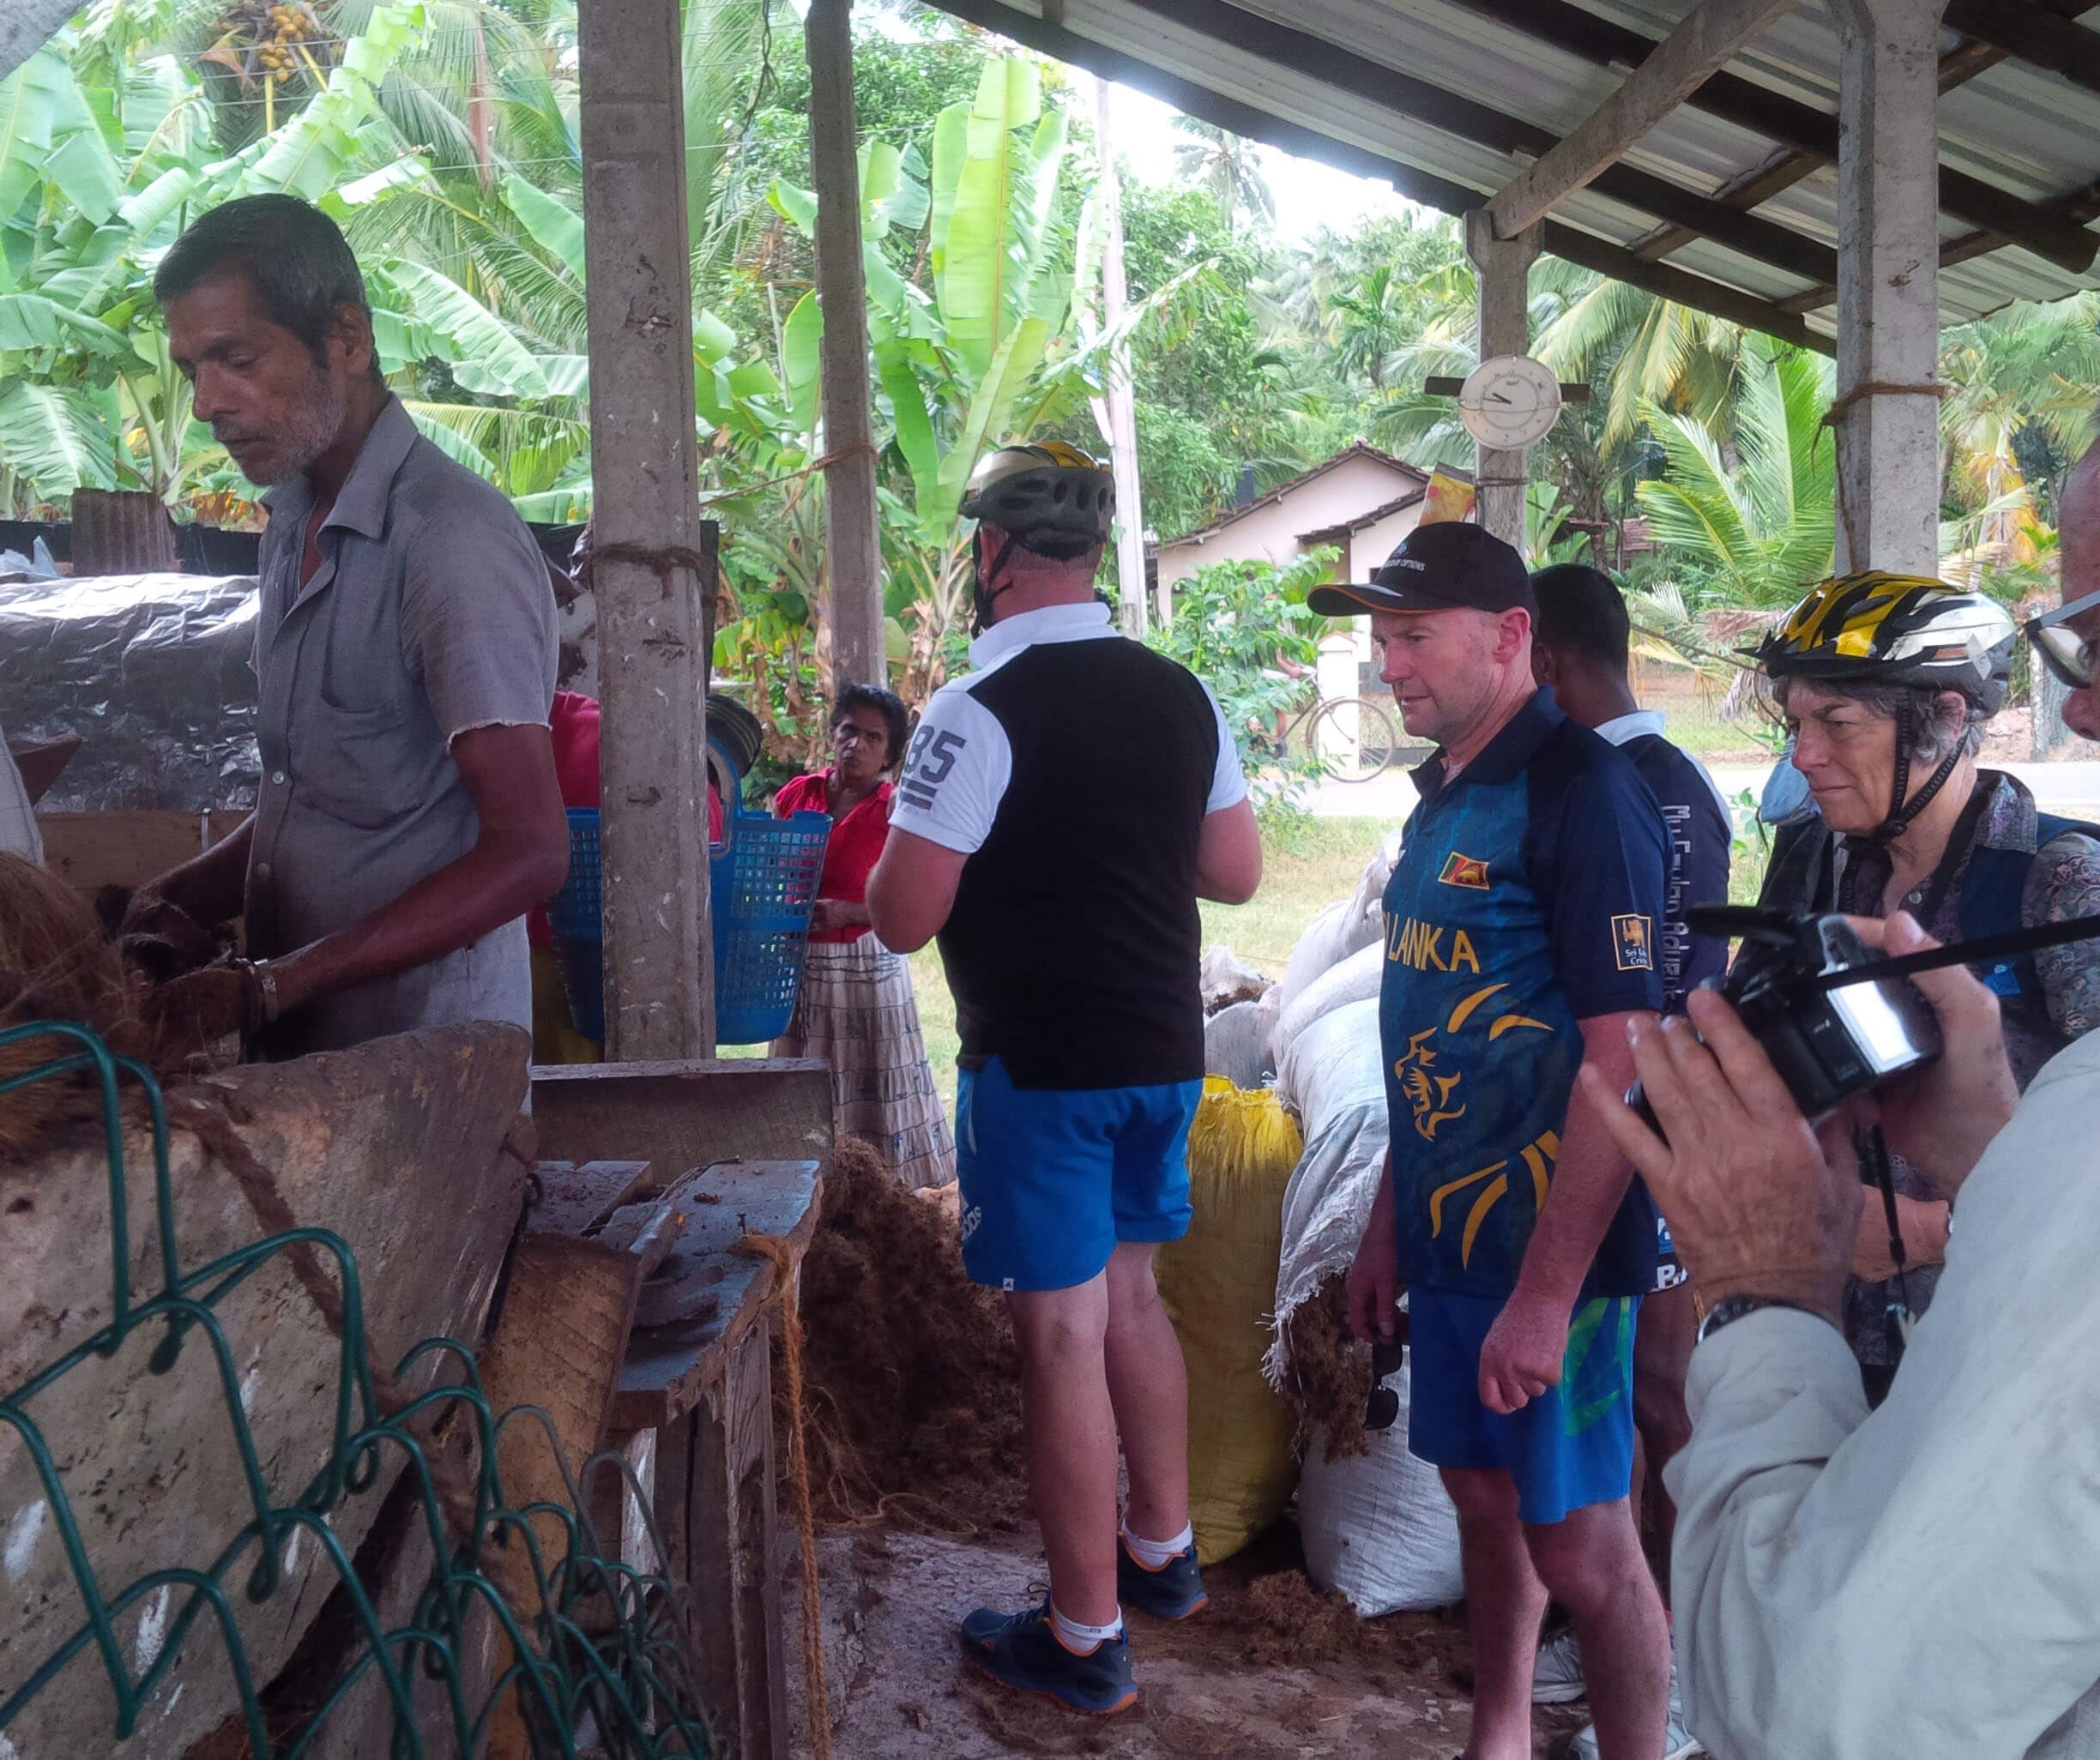 The tourists explore Local alcohol making process in Negombo Sri Lanka